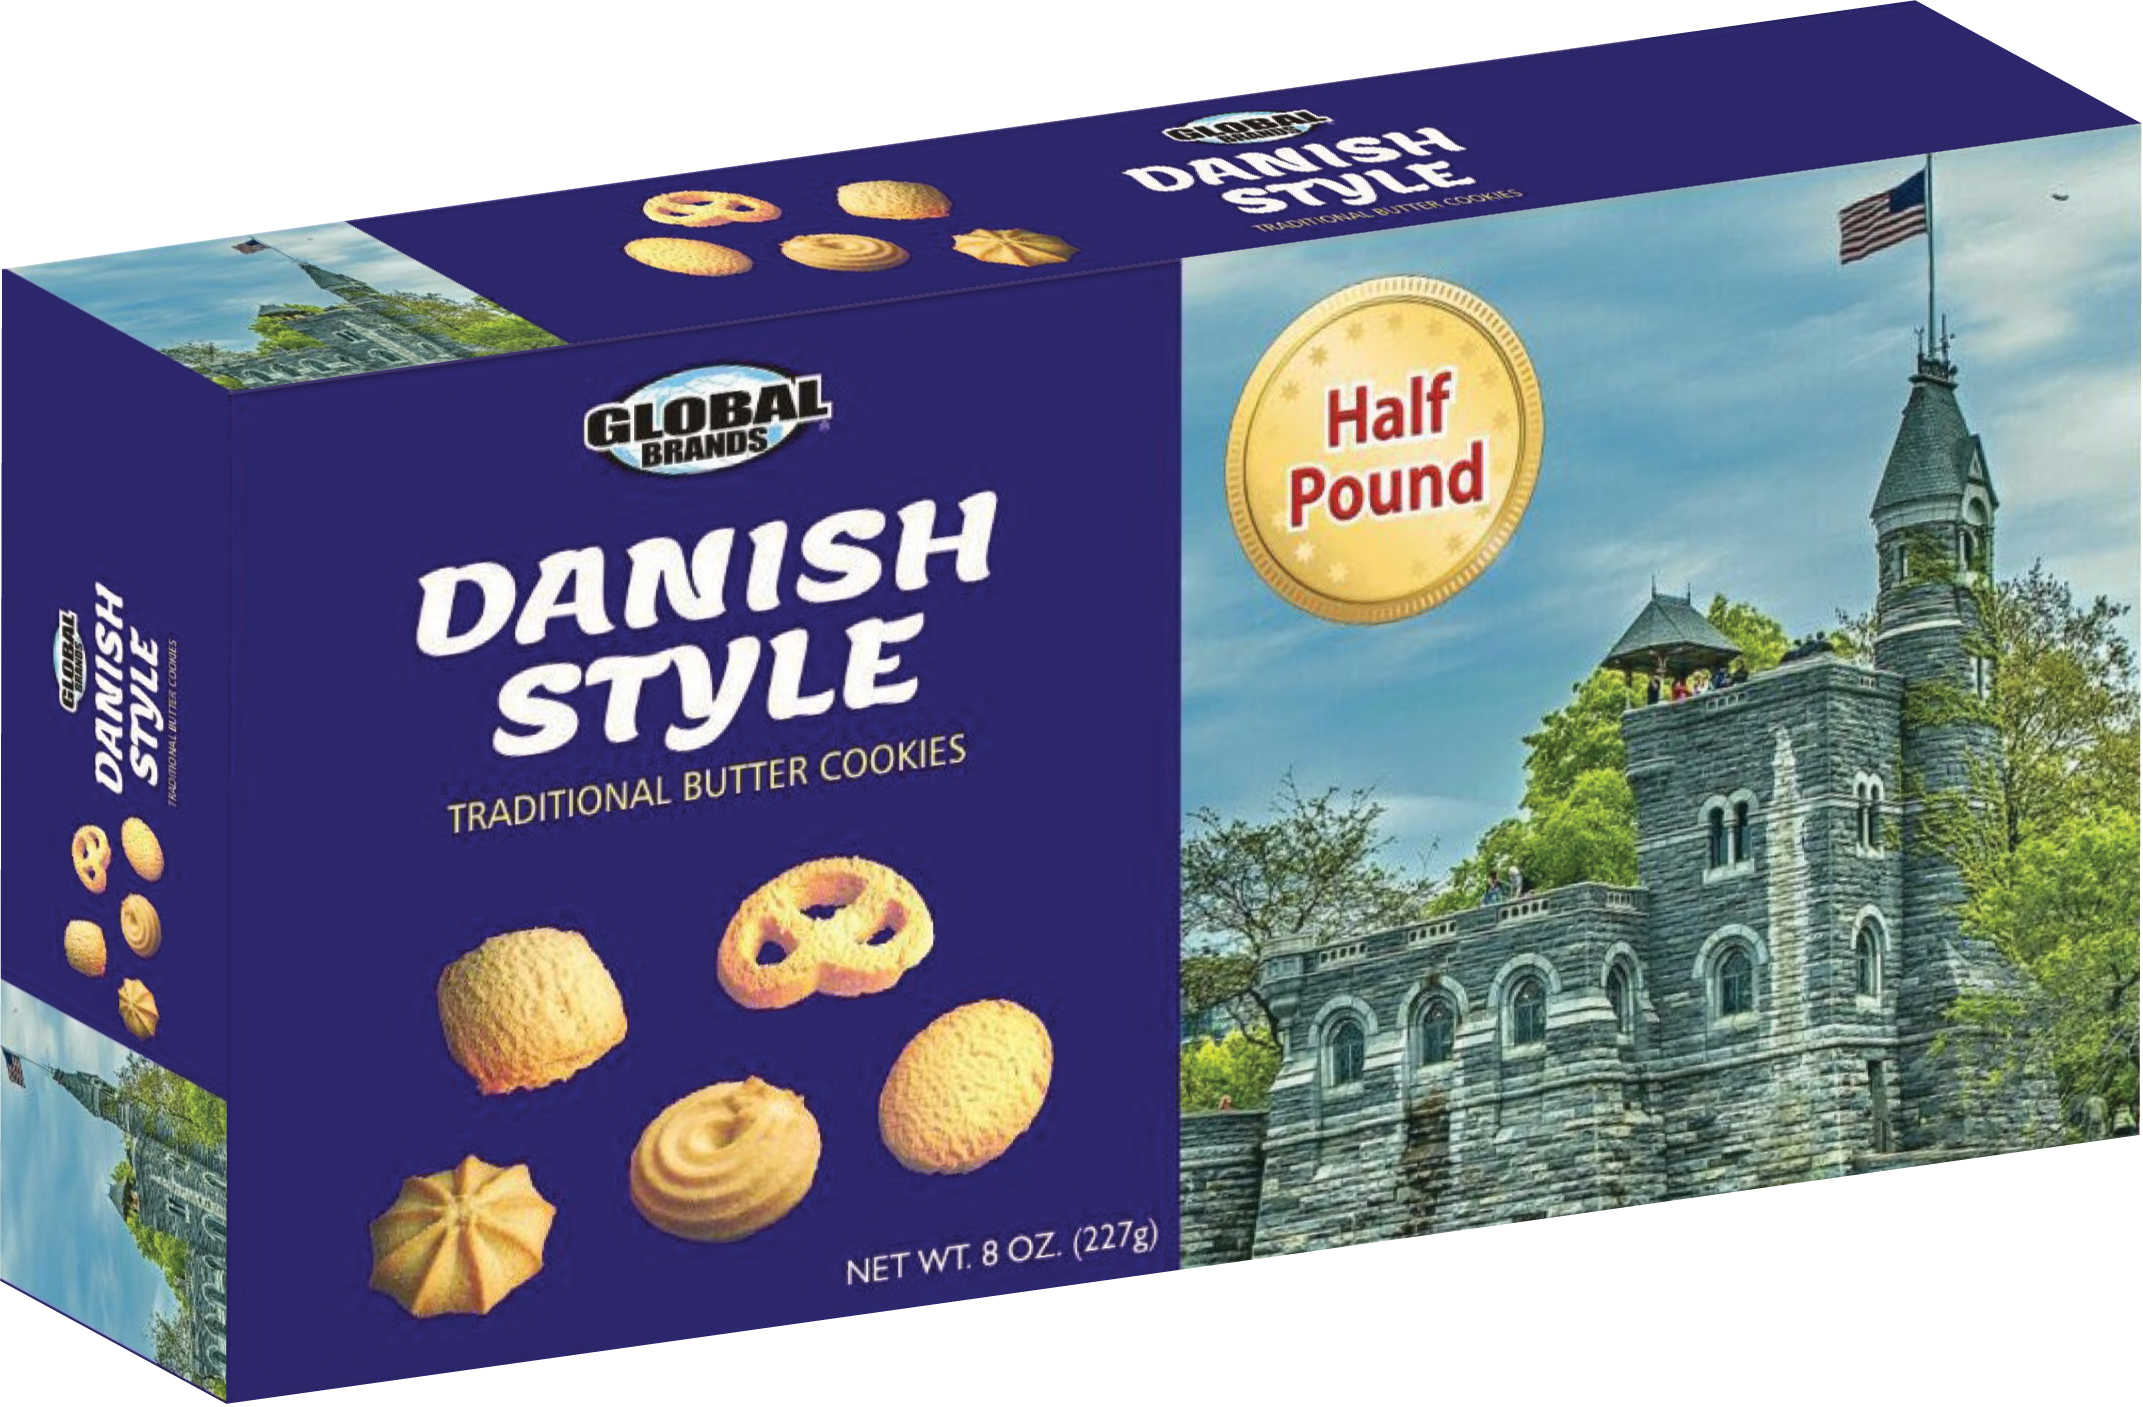 Danish Style Butter Cookies - Half Pound Box